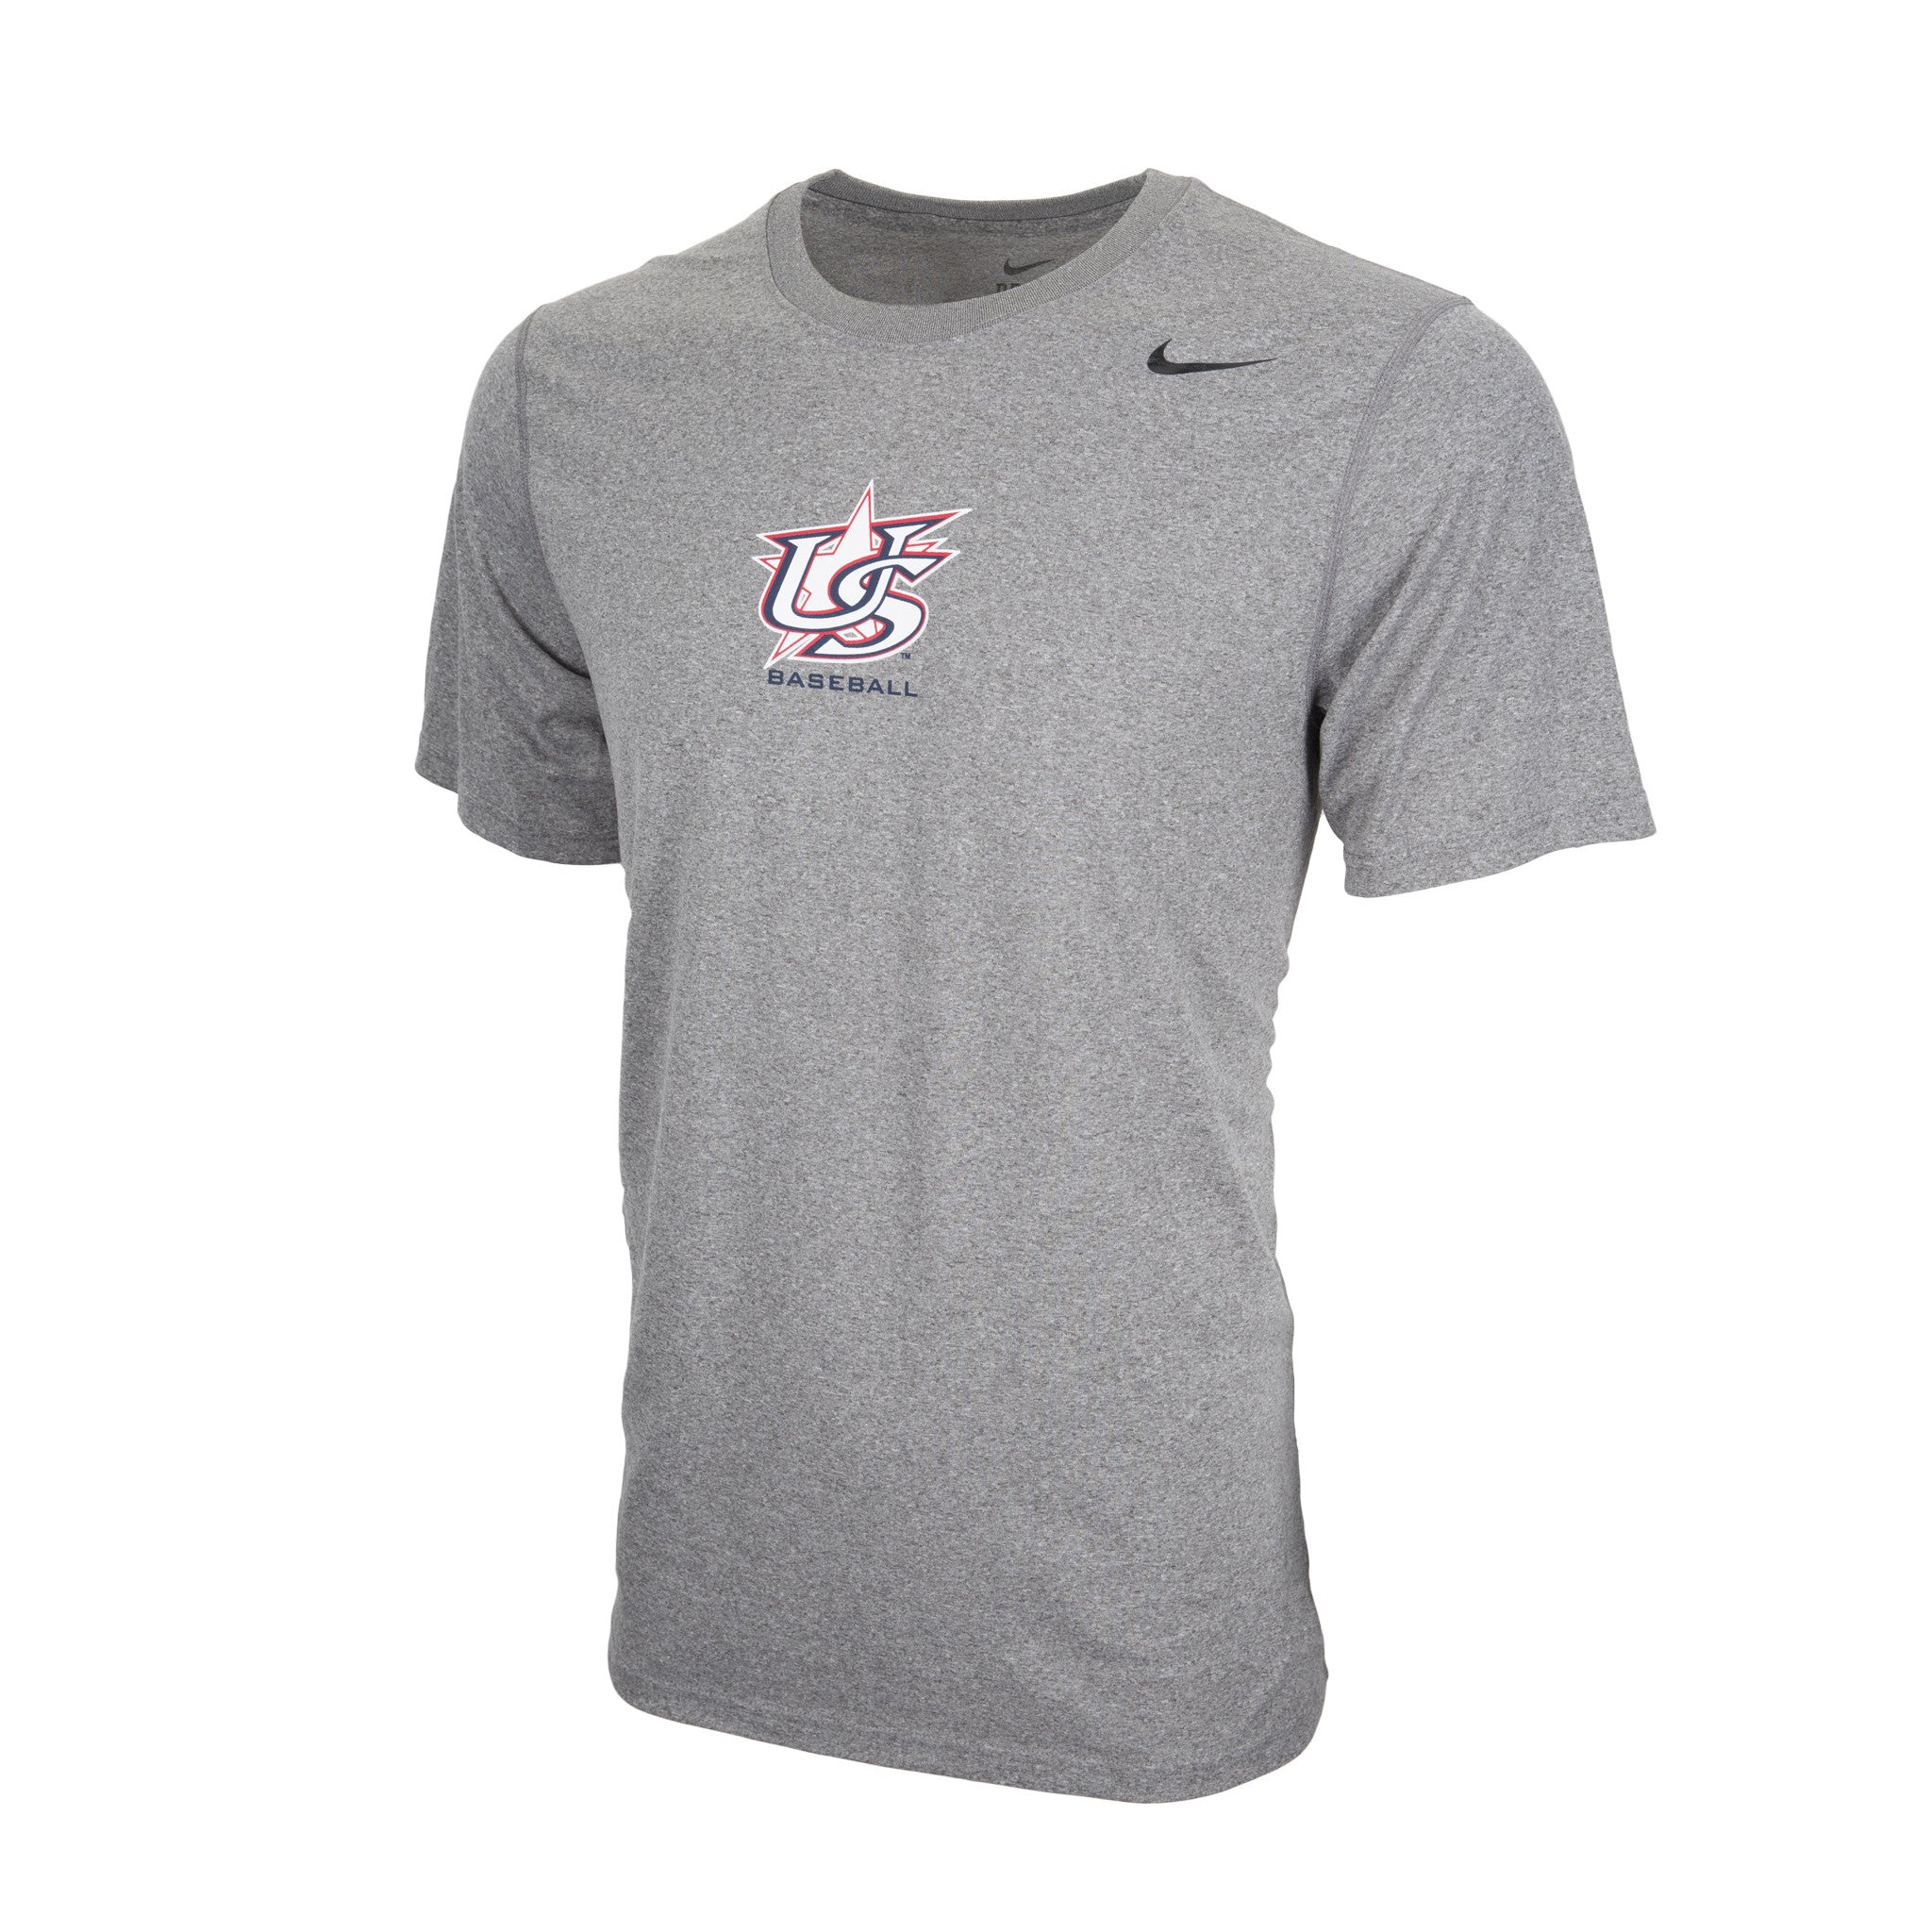 Nike MLB Texas Rangers Baseball Gray Graphic T-shirt Tee Sz L Cotton  Regular Fit